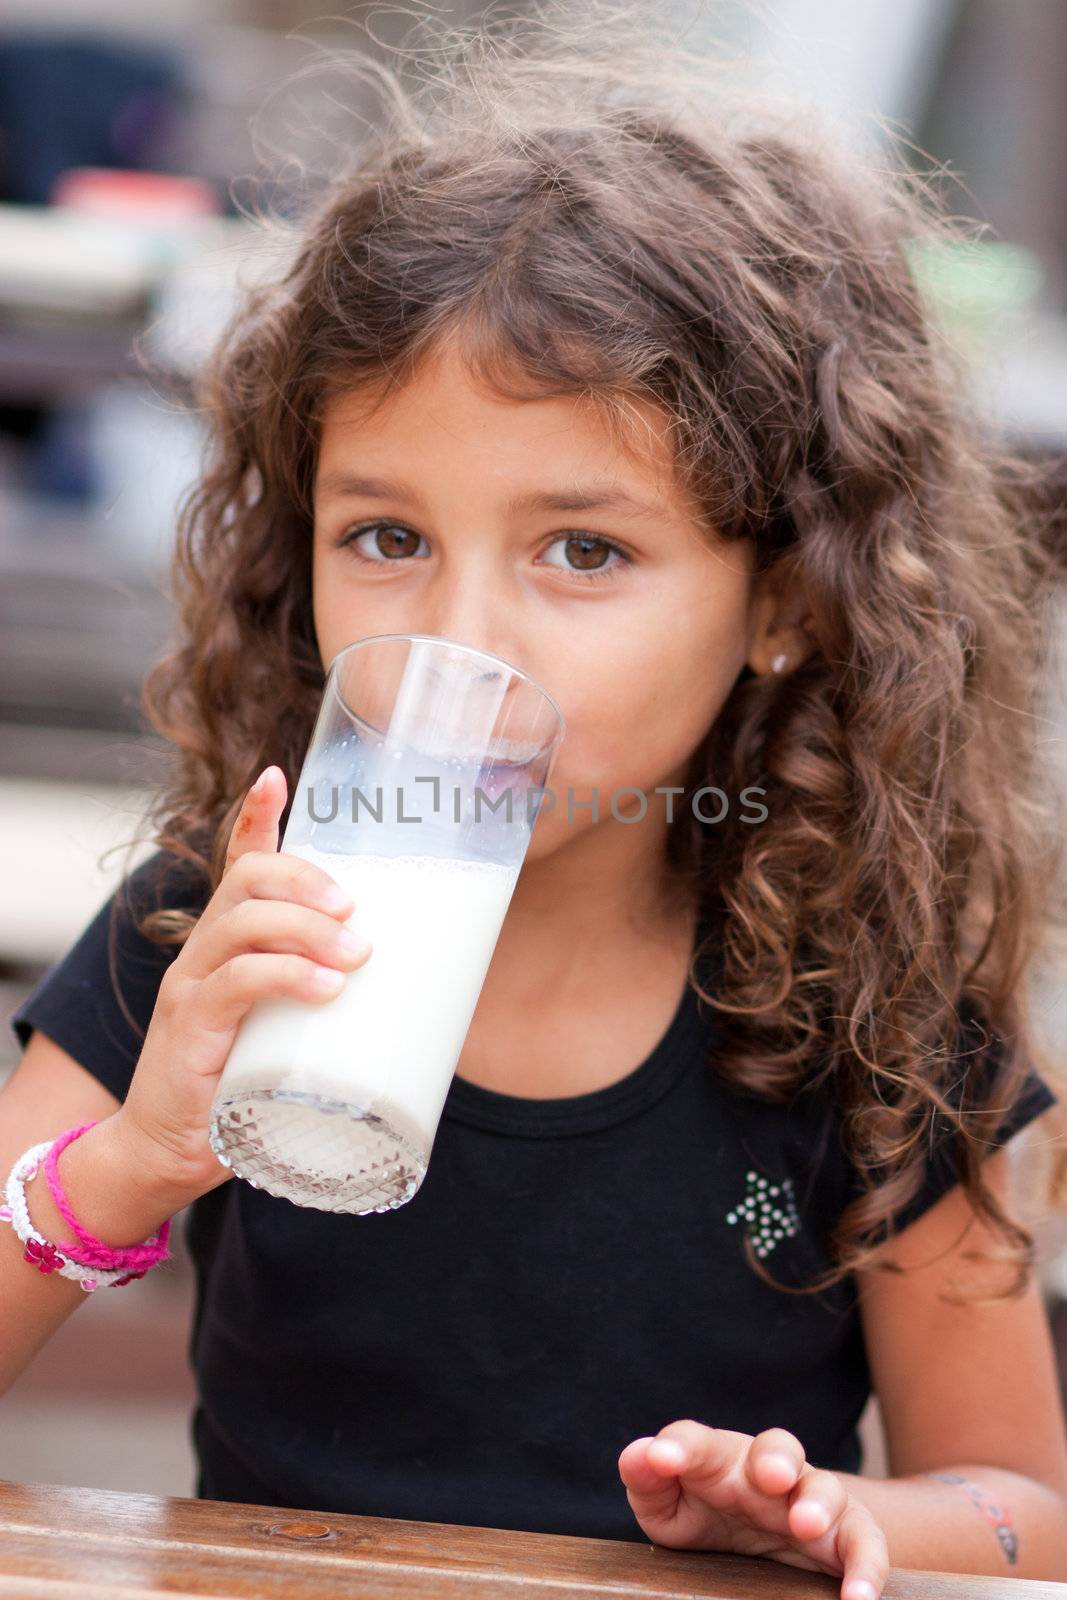 Cute little girl drinking a glass of milk